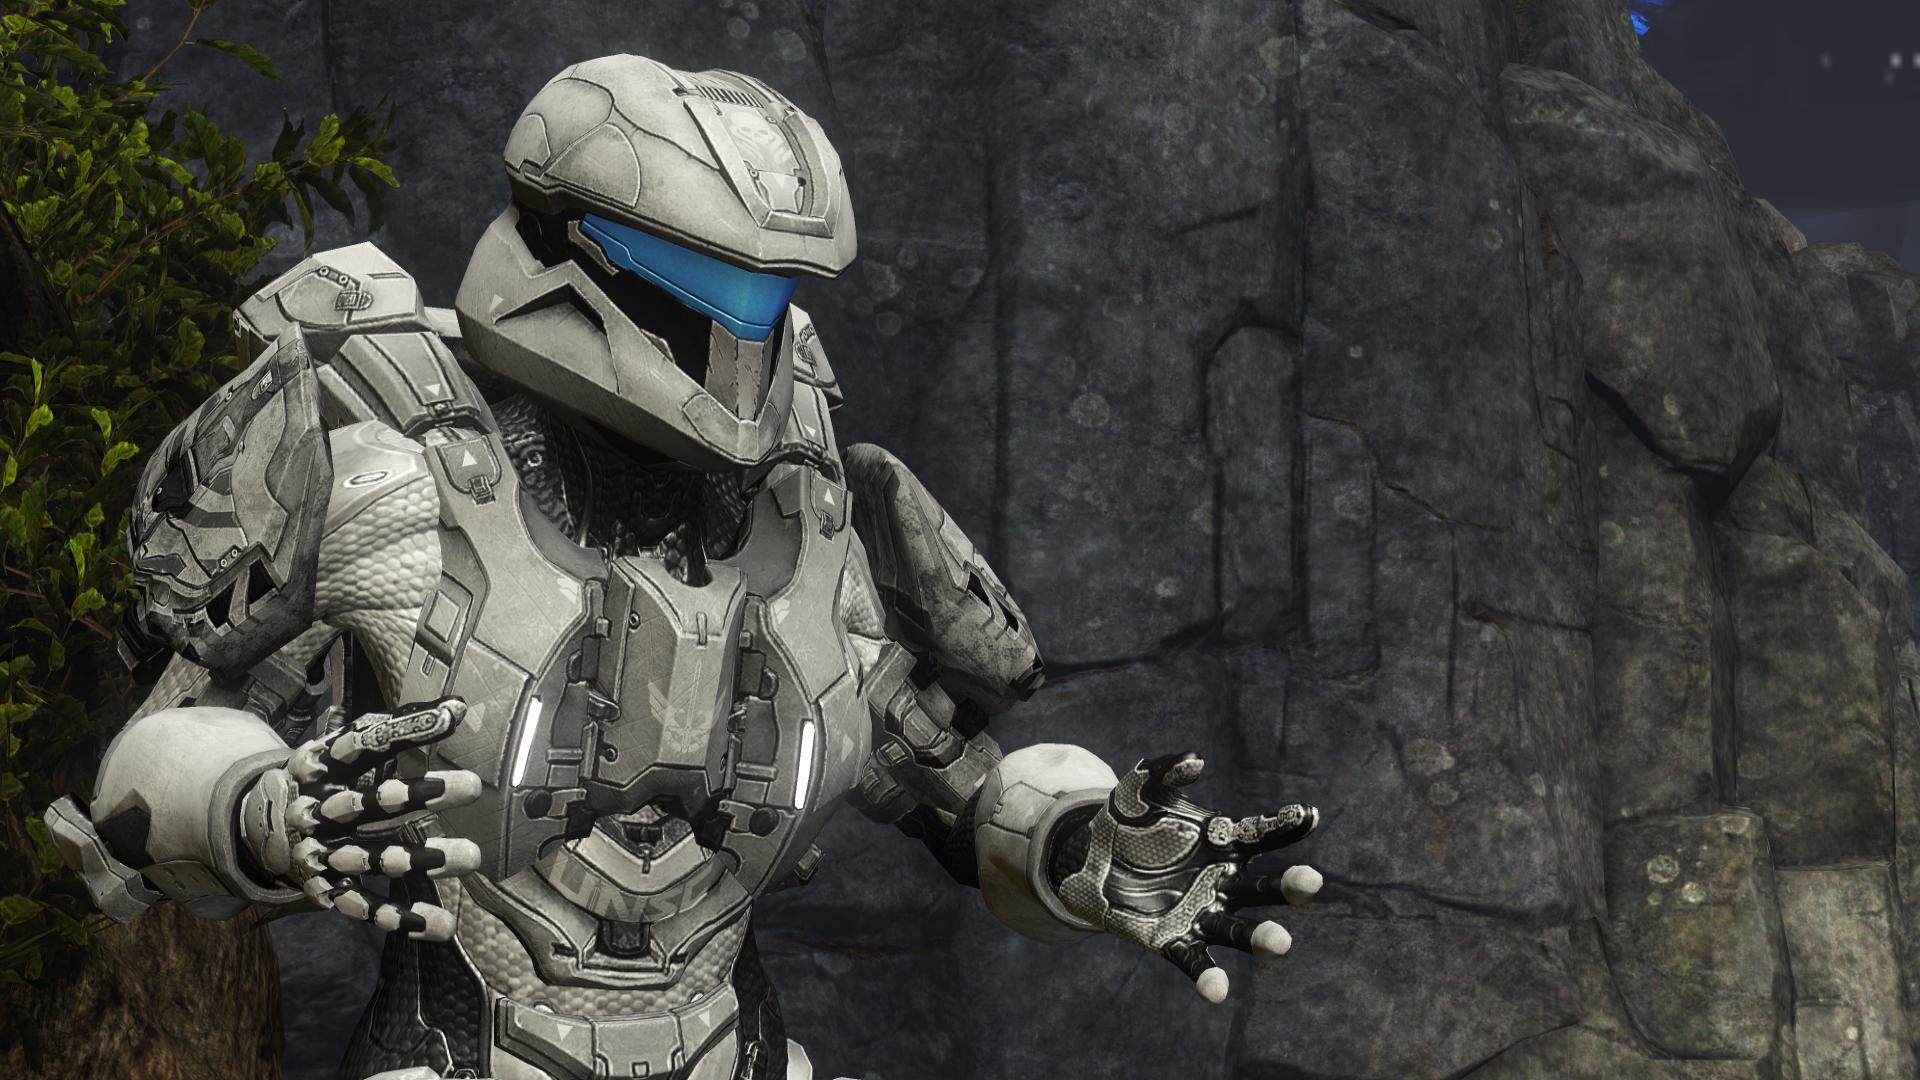 Halo orion armor